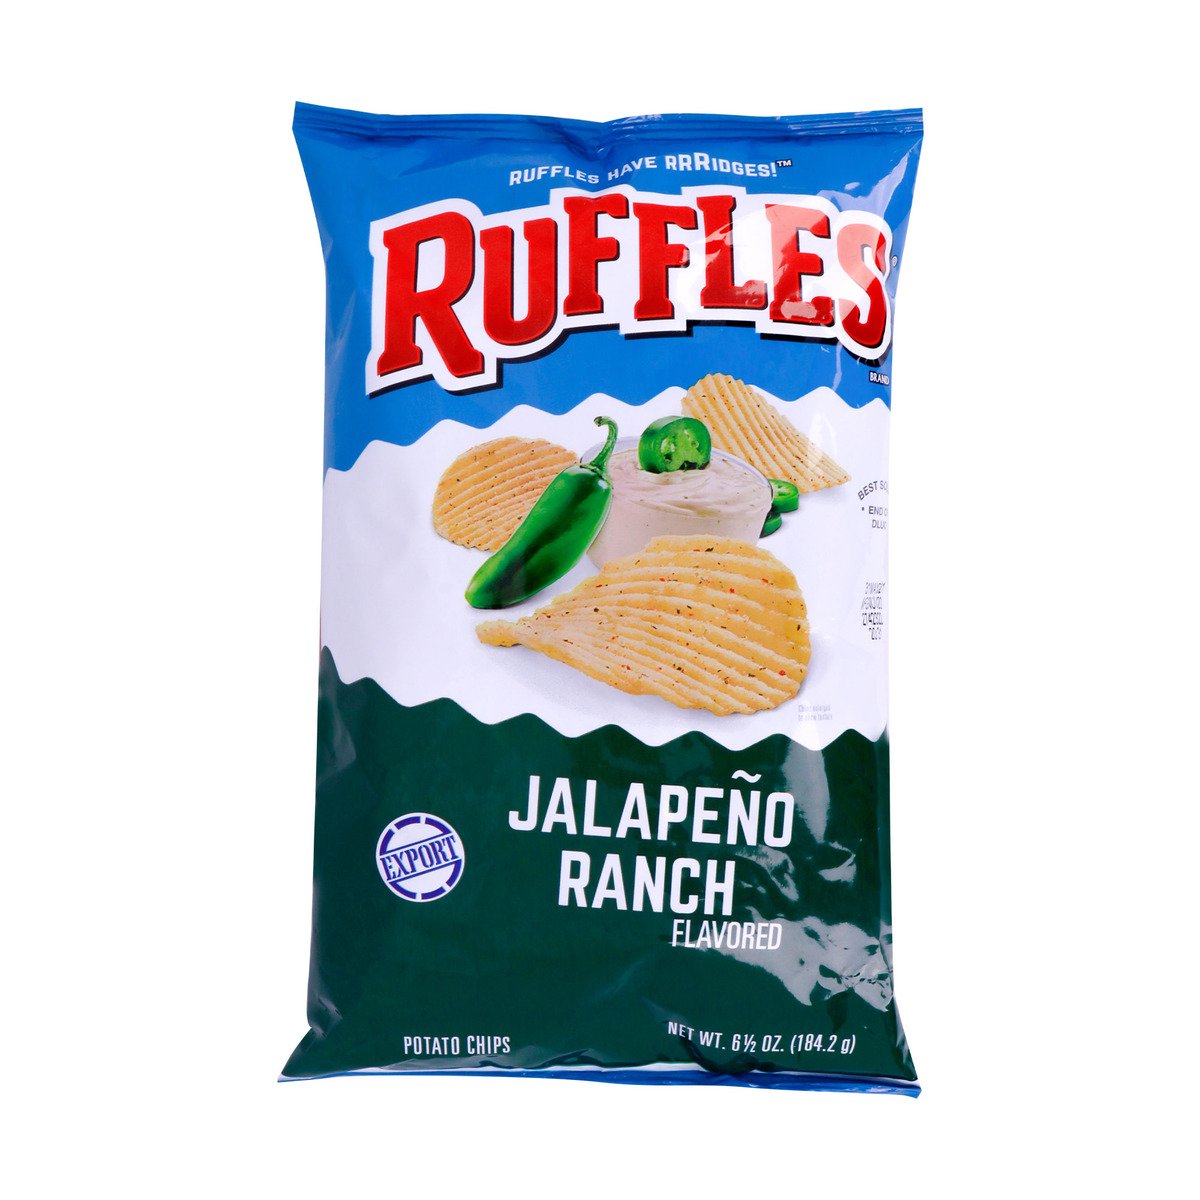 Ruffles Potato Chips Jalapeno Ranch 184.2 g